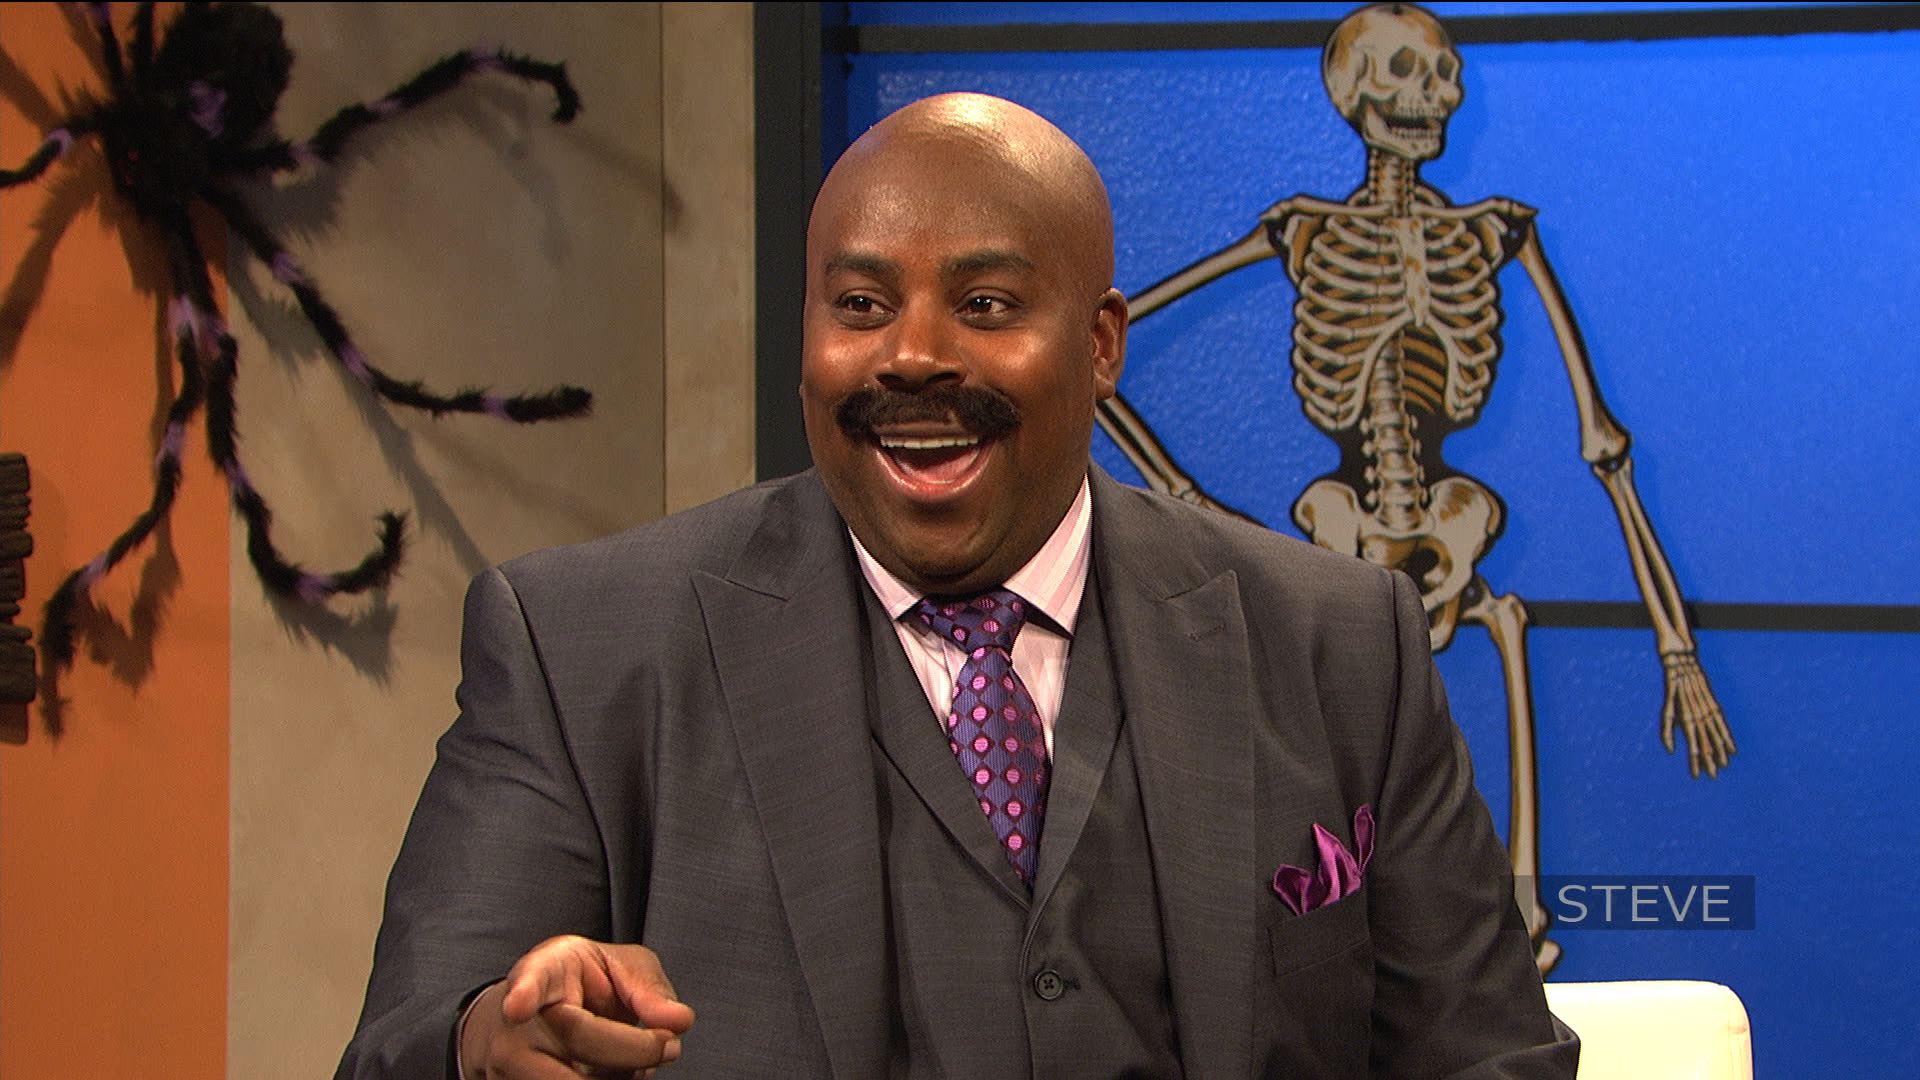 Watch The Steve Harvey Show: Halloween From Saturday Night Live - NBC.com